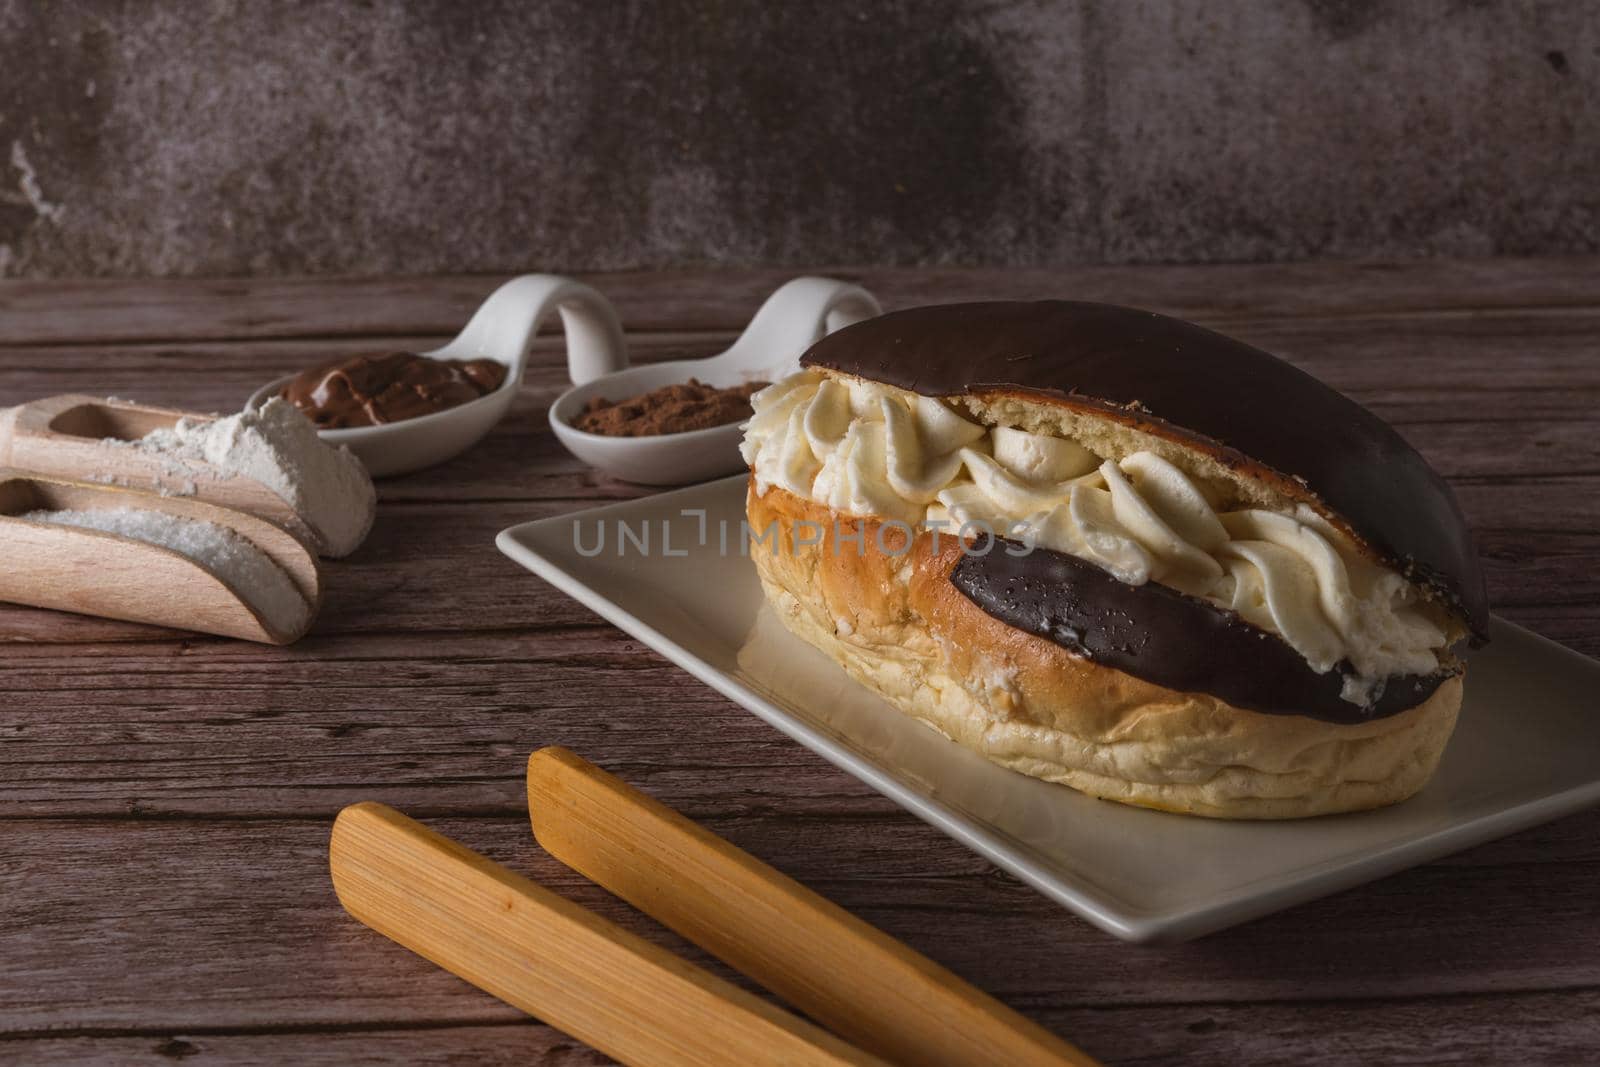 chocolate-covered cream-filled bun by joseantona